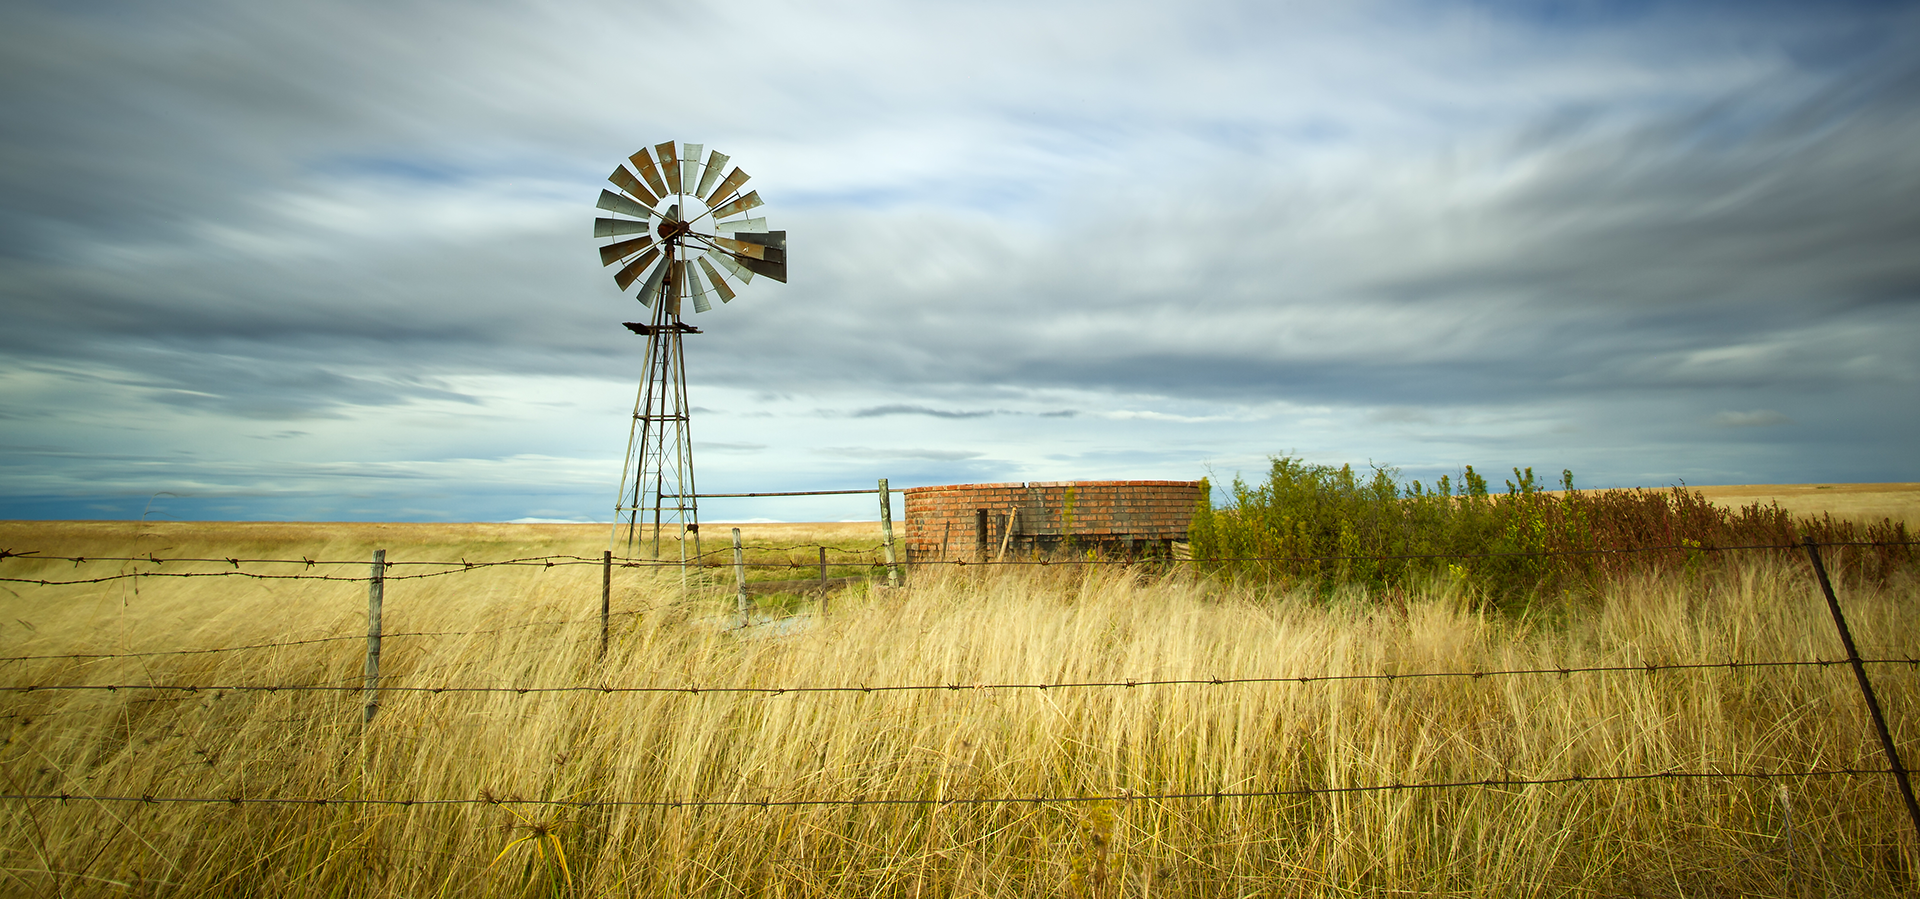 Windmill in a wheat field